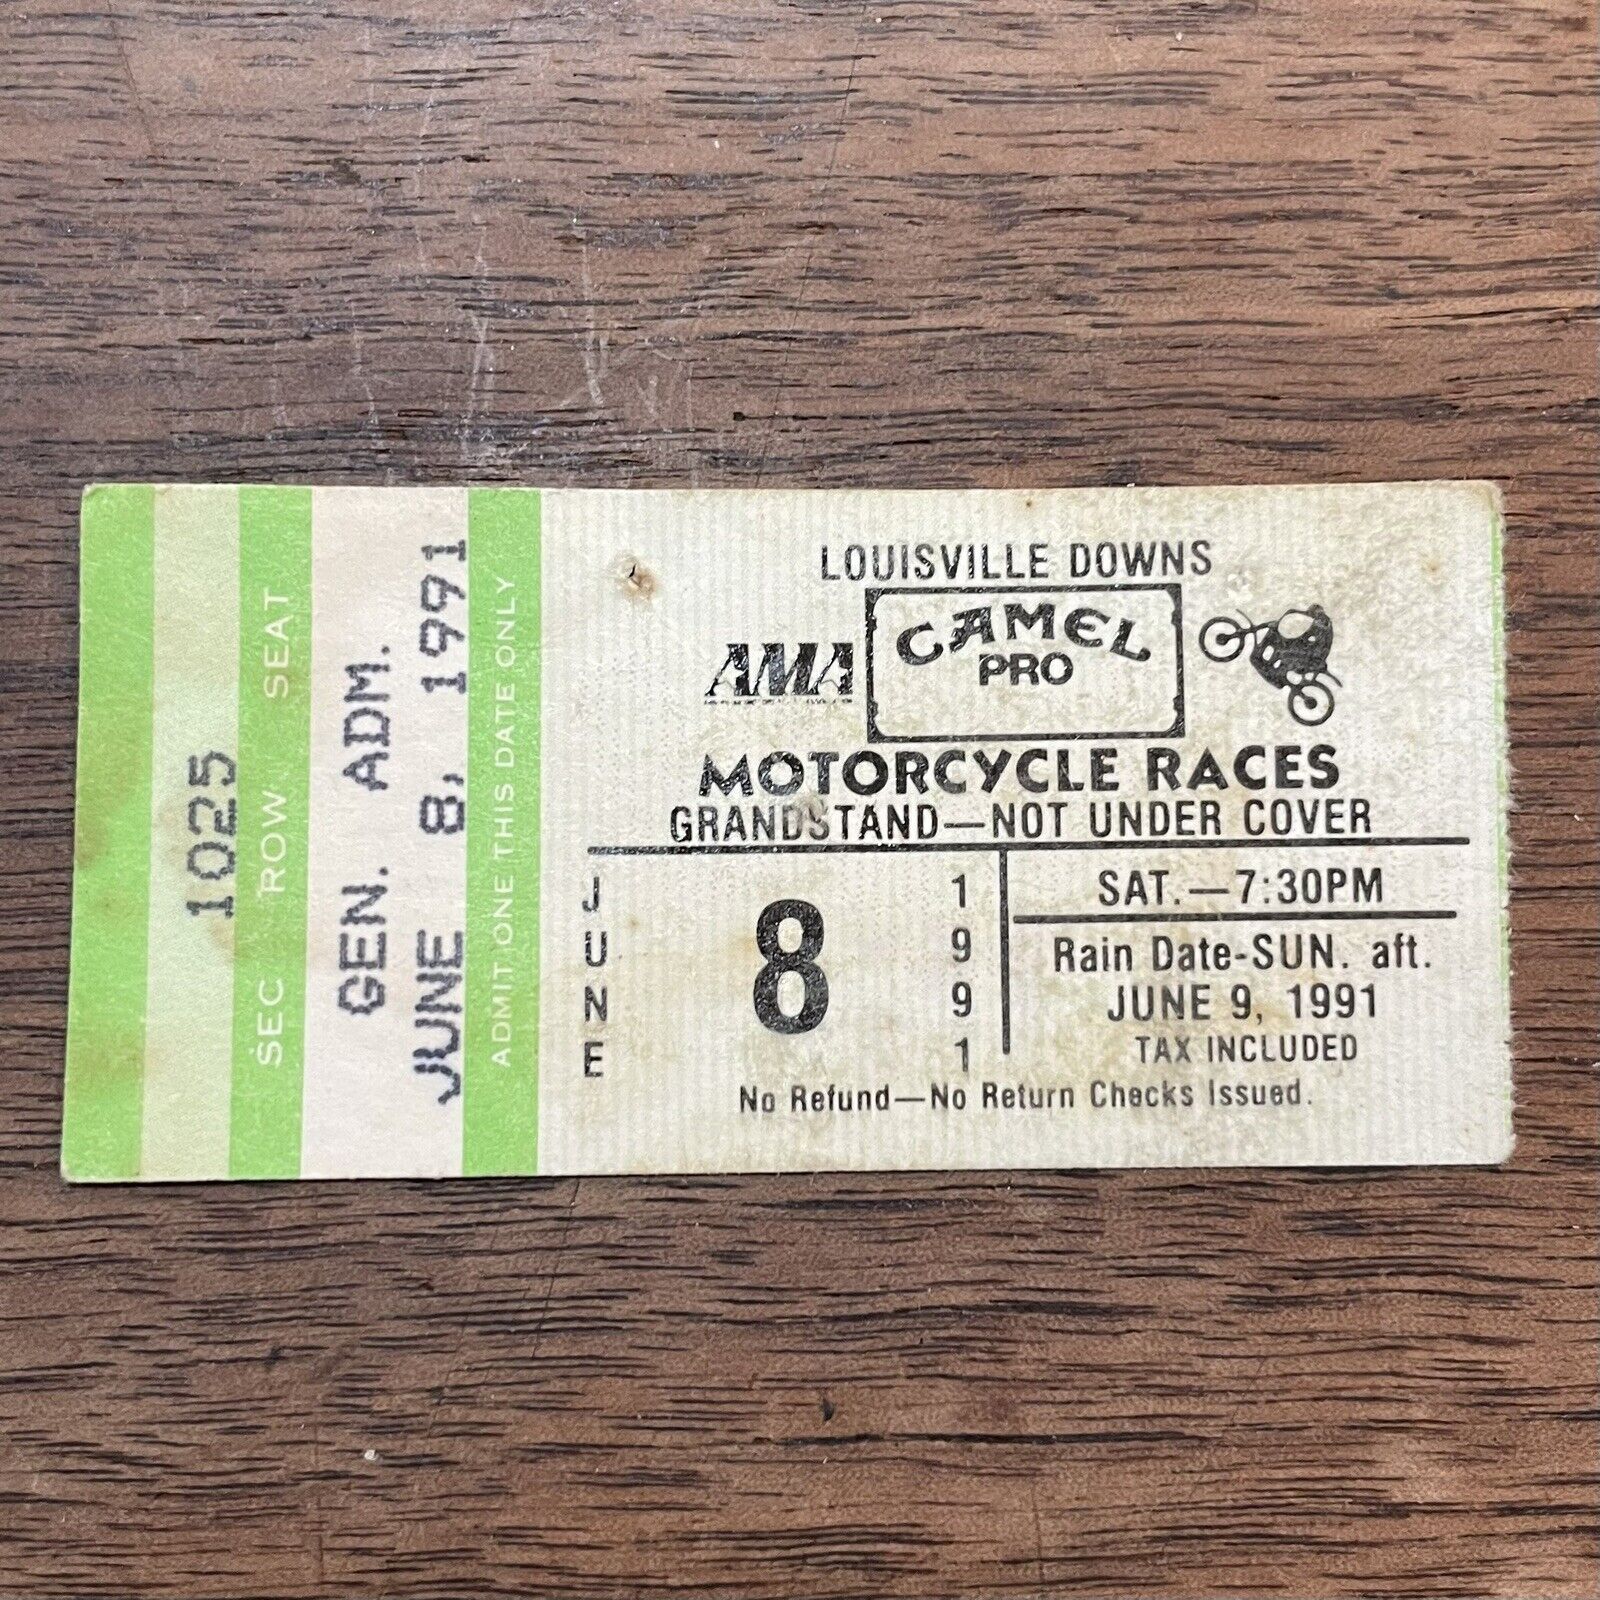 CAMEL PRO AMA Motorcycle Races Ticket Louisville Downs June 8 1991